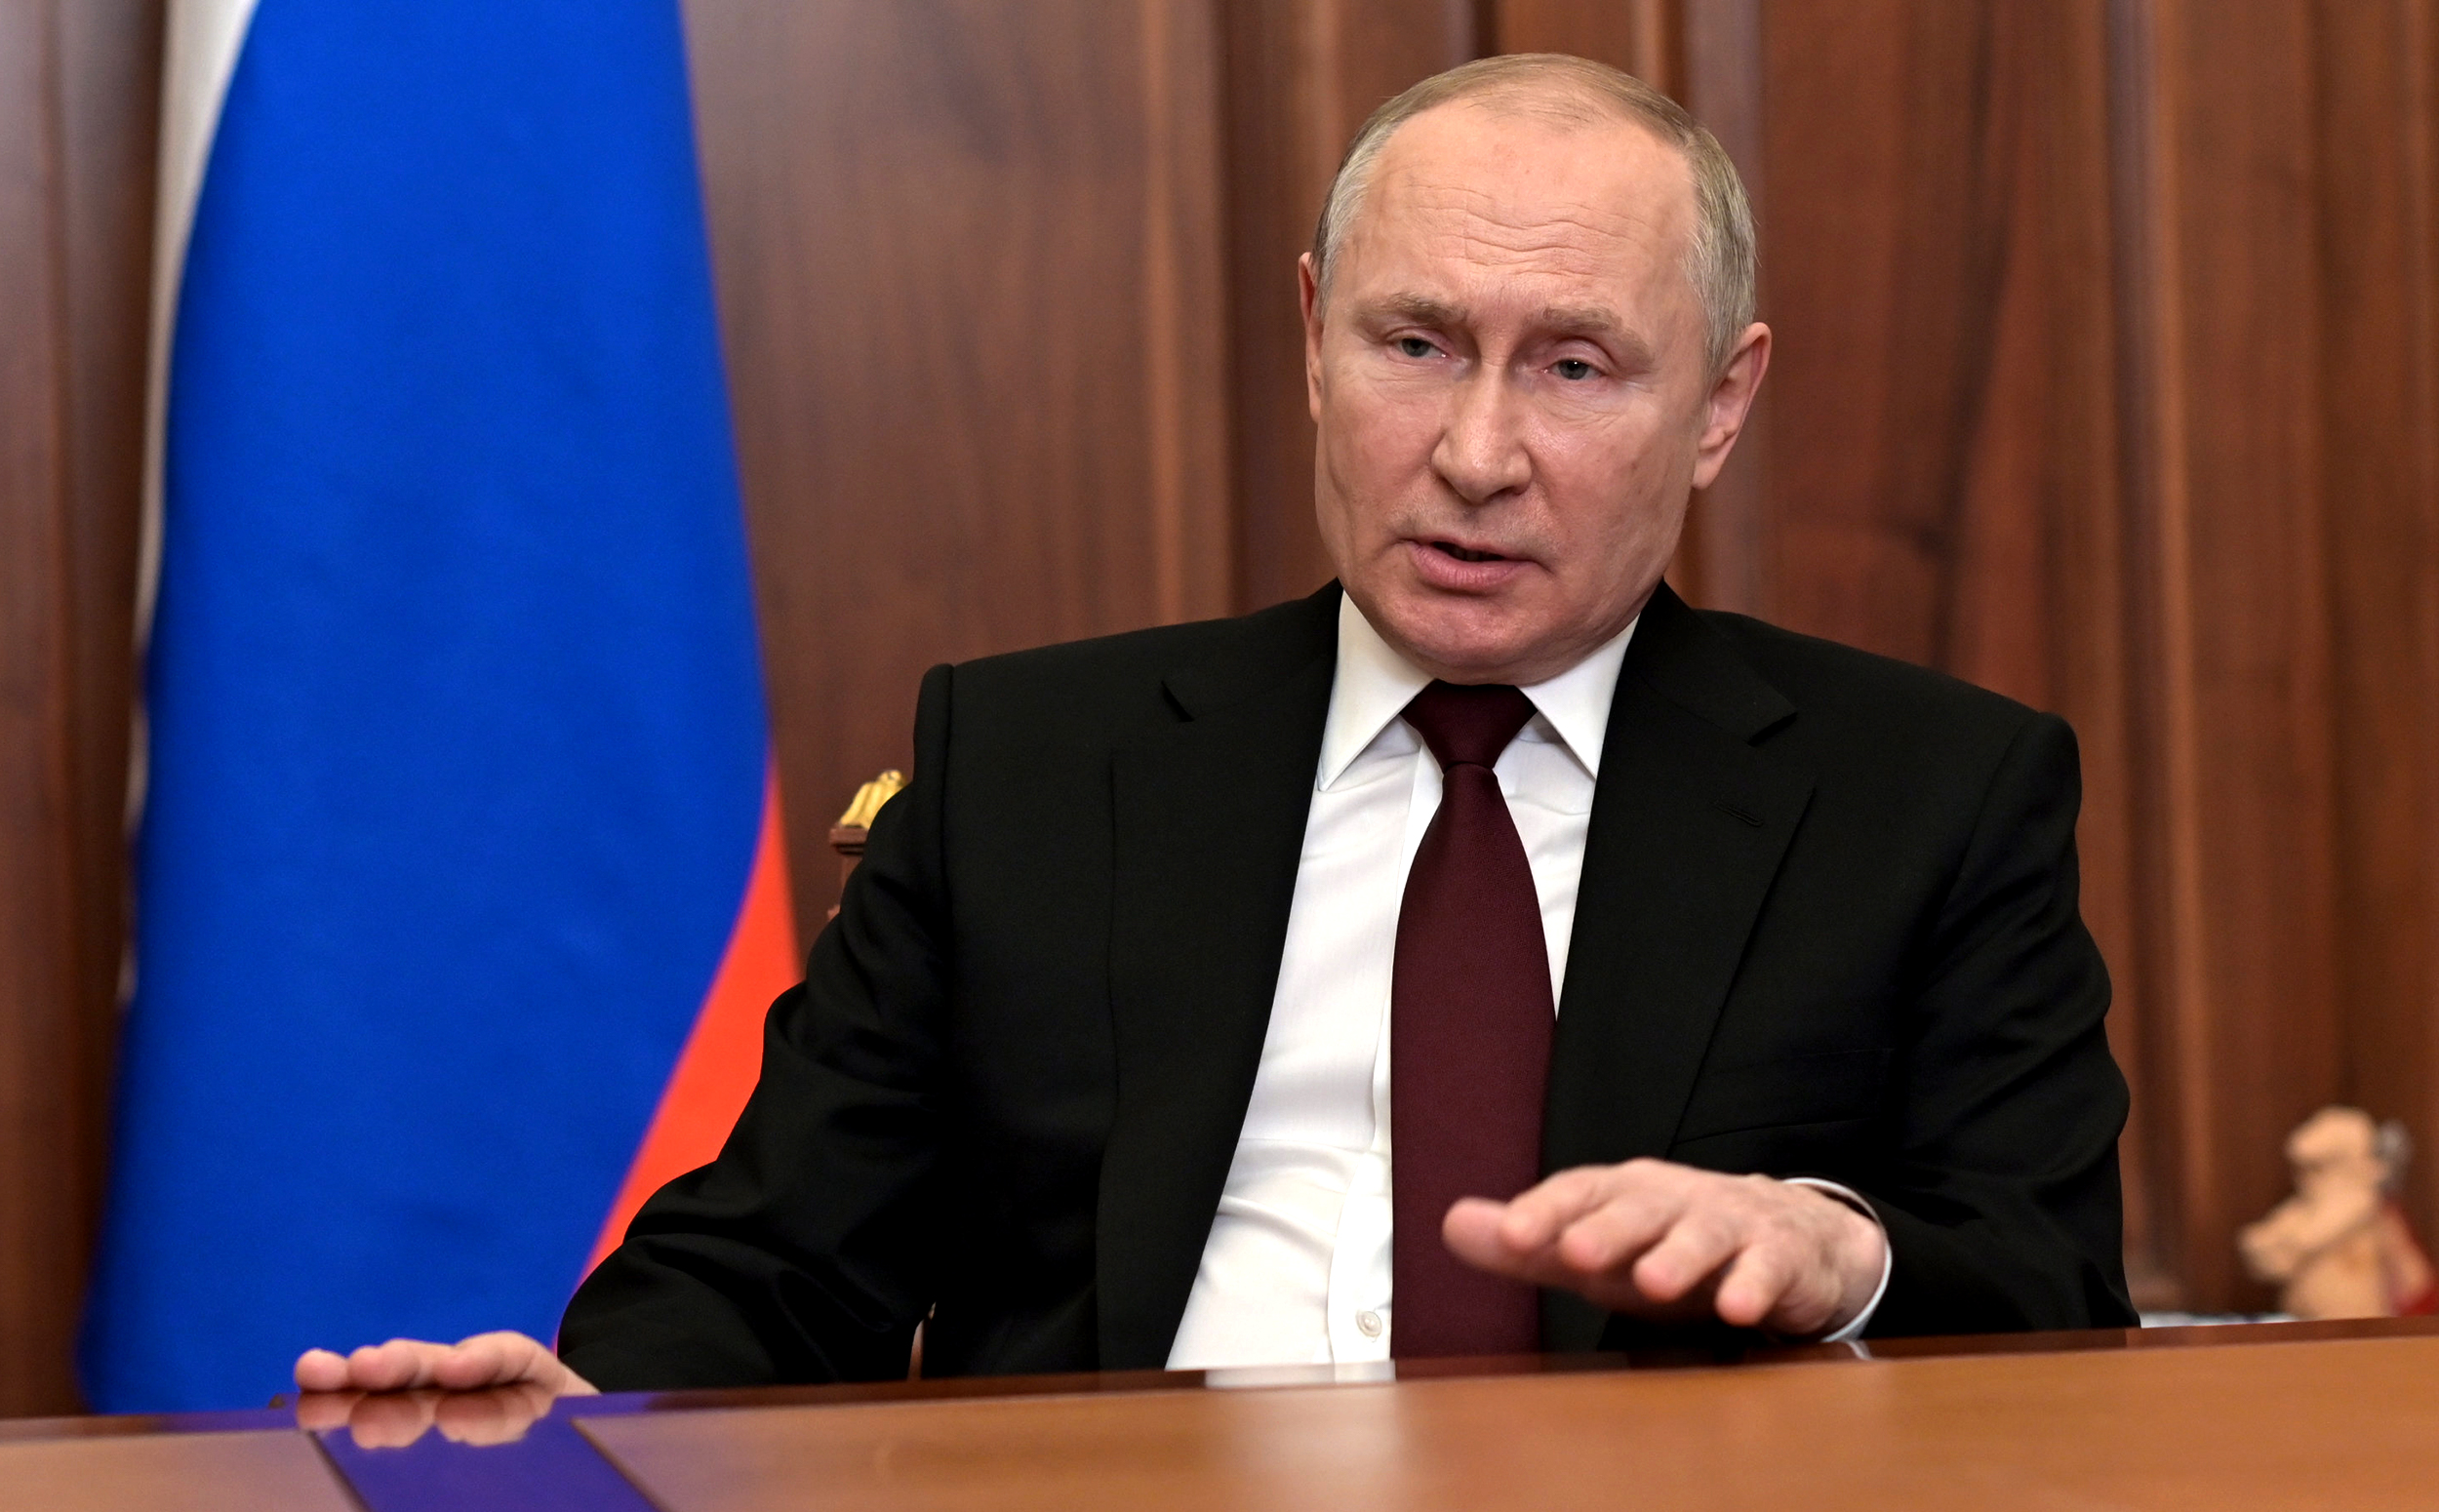 Putin to decide when Ukraine operation ends